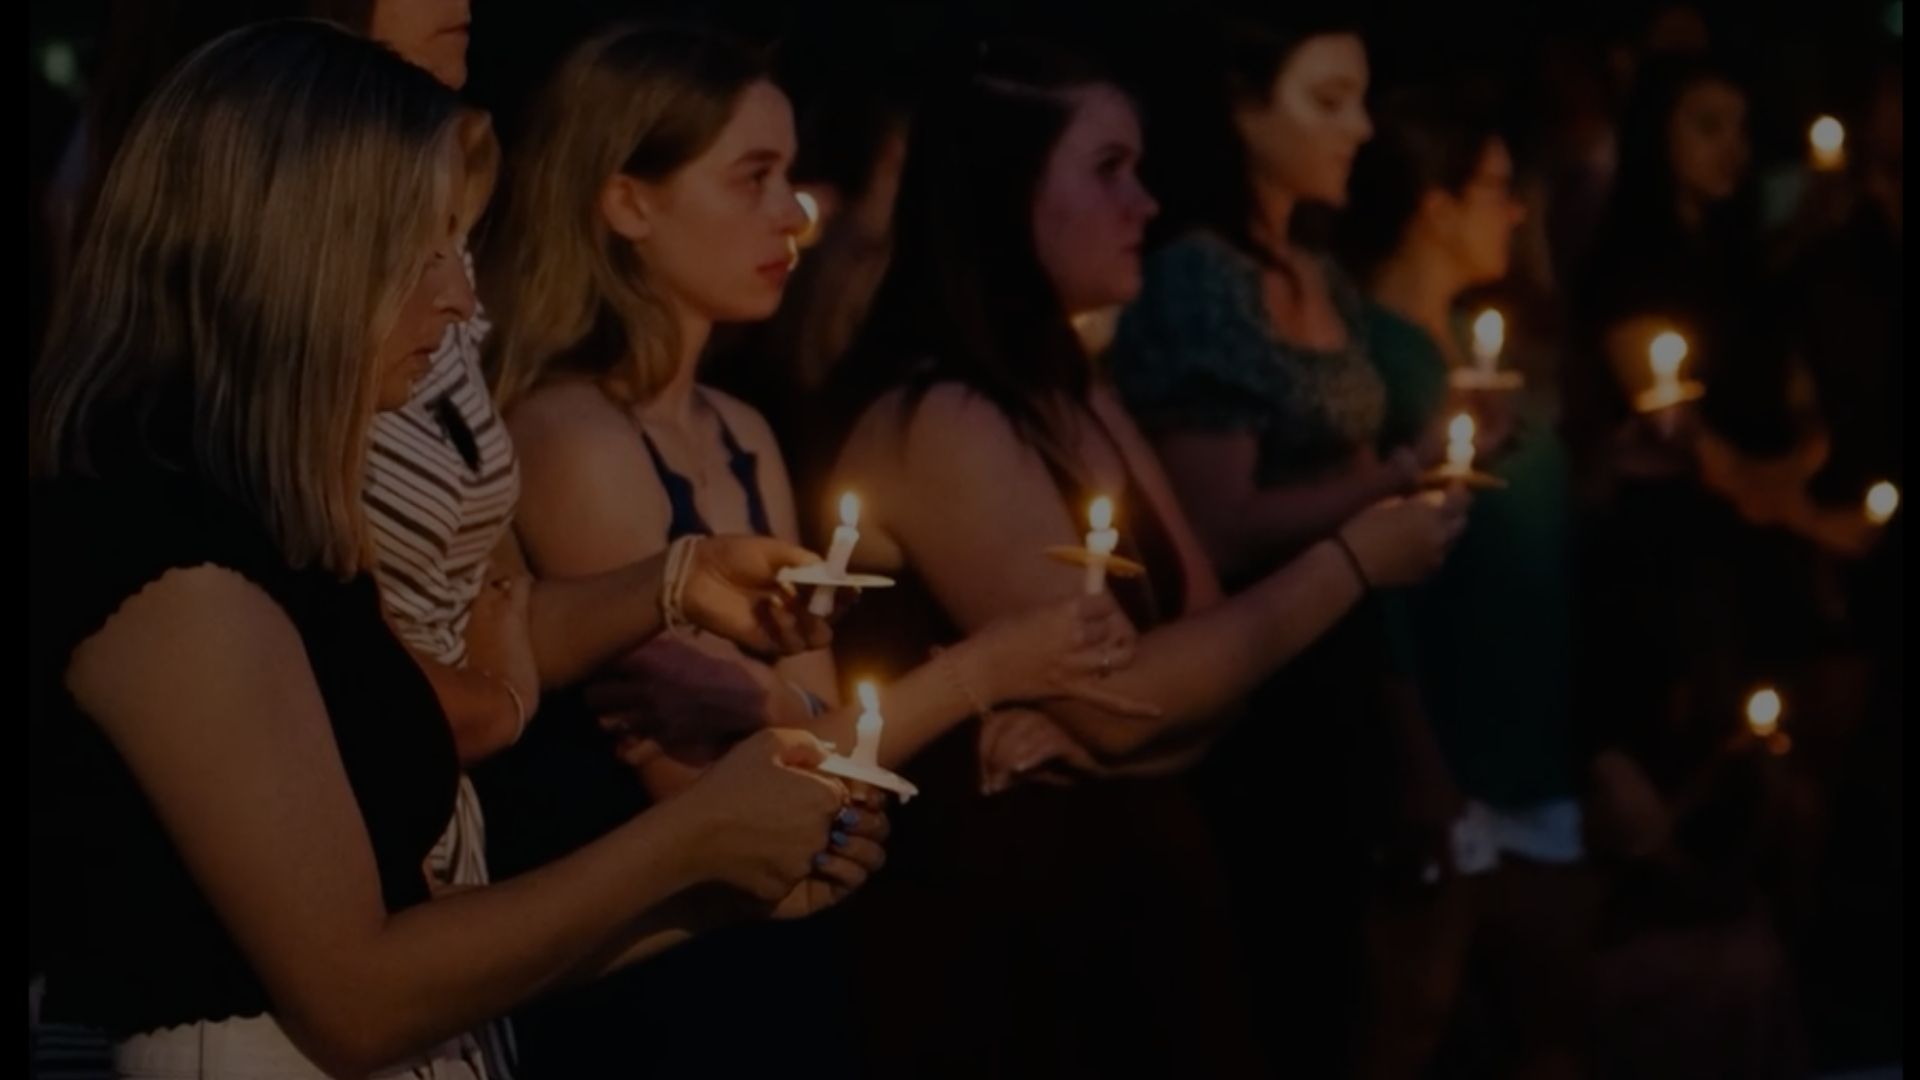 Candlelight-Vigil